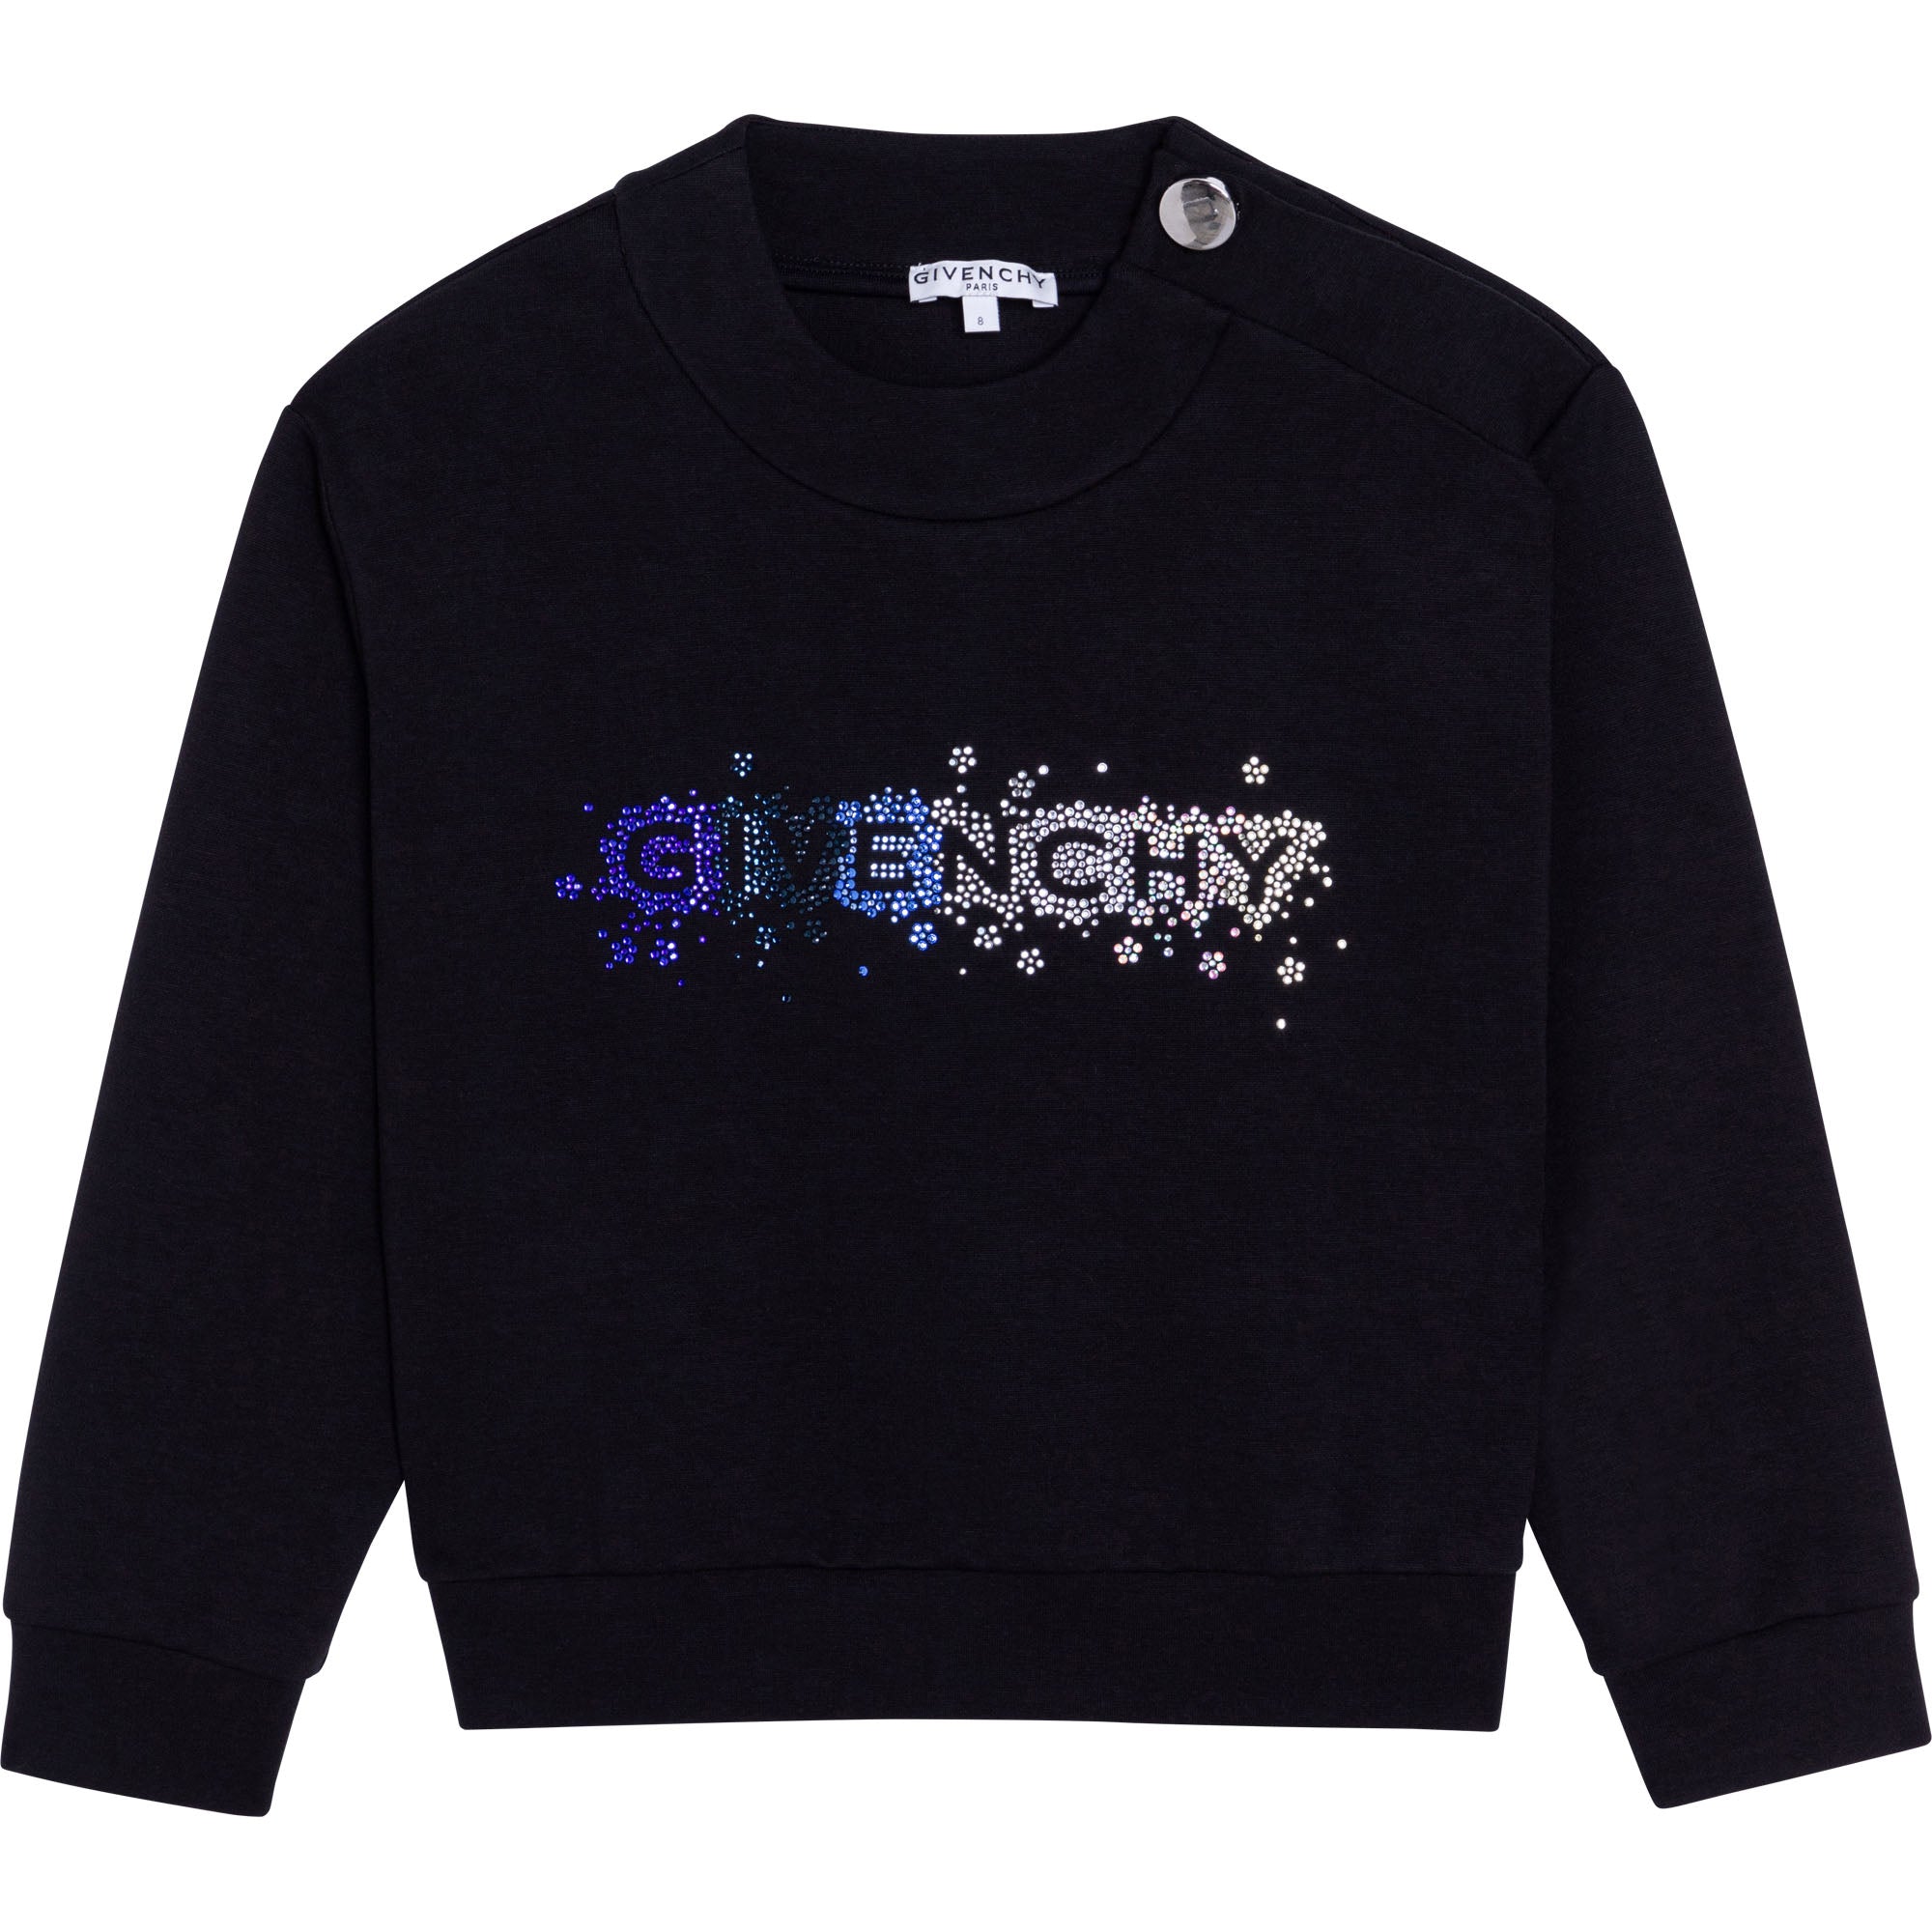 Girls Black Logo Sweatshirt